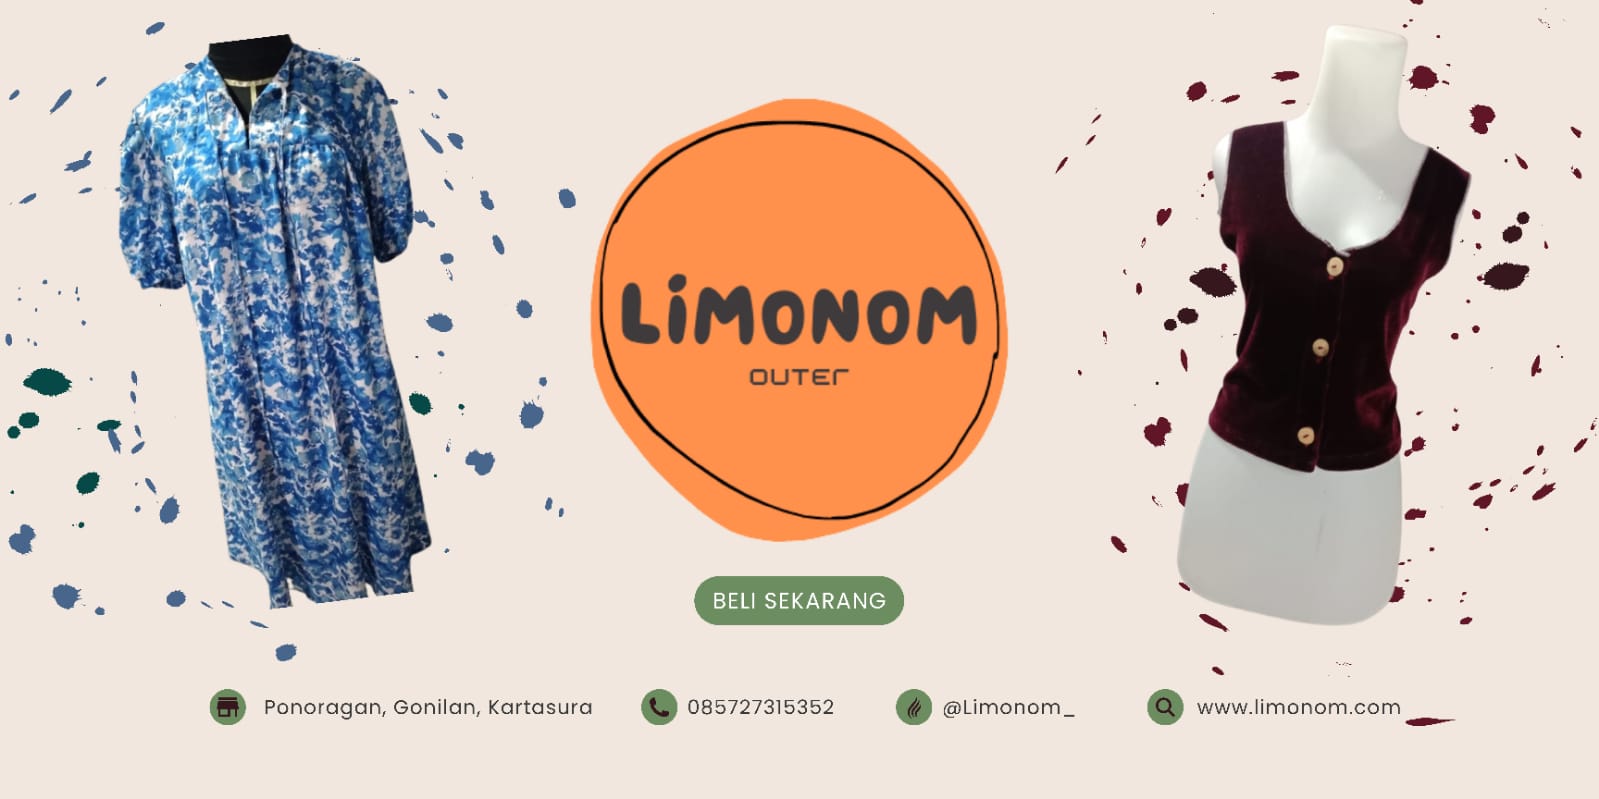 Limonom